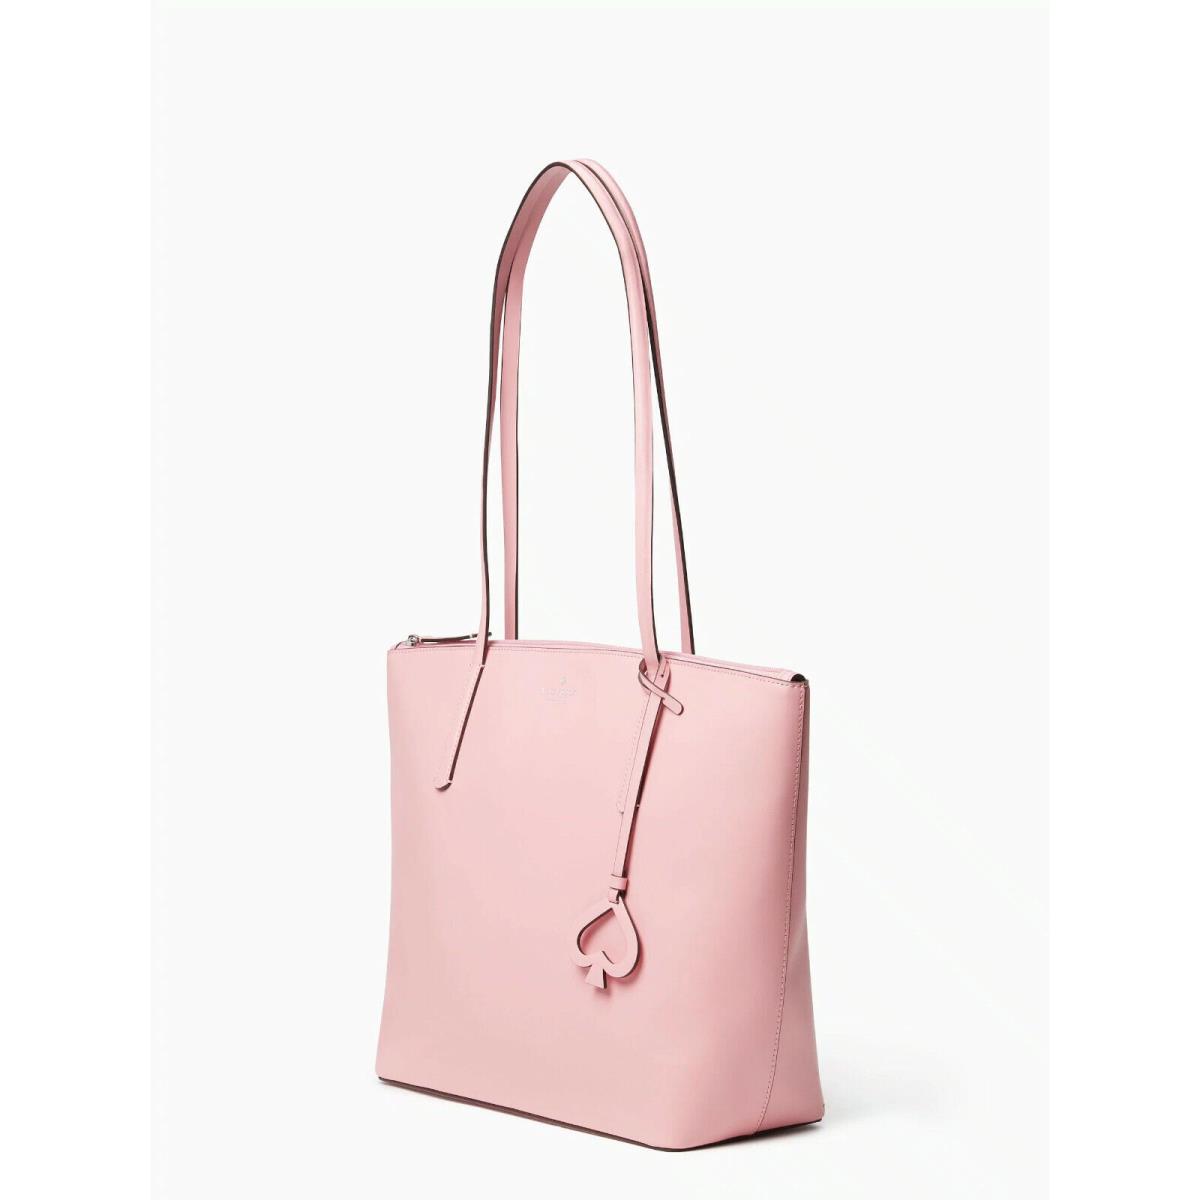 Kate Spade Zina Smooth Pink Leather Large Tote WKRU6852 Bag Charm $329  Retail FS 